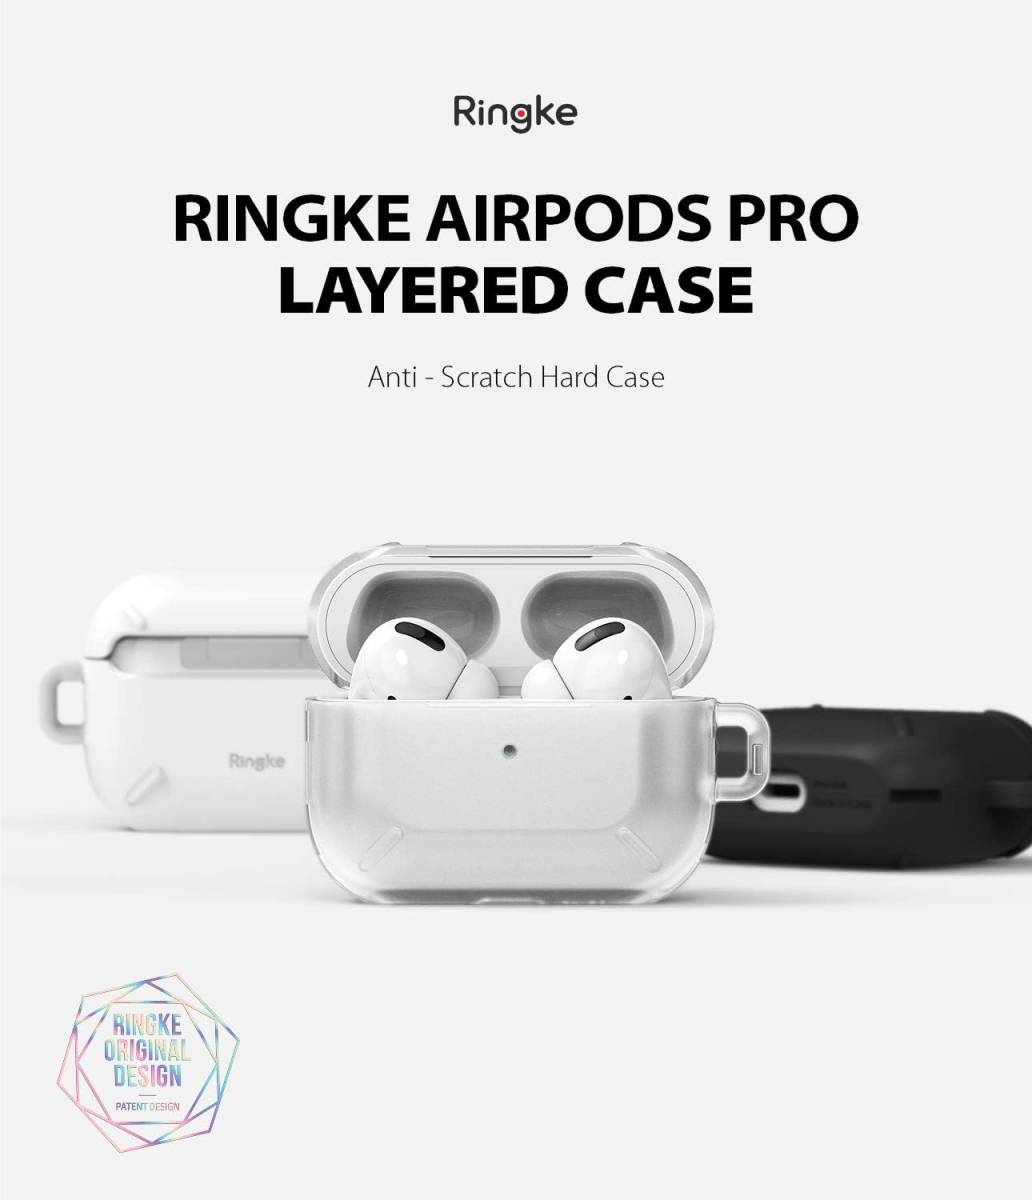 【Ringke】AirPods Pro ケース 充電ケースカバー フロントLED表示 保護カバー カラビナ/キーチェーン付き (White ホワイト)②_画像2